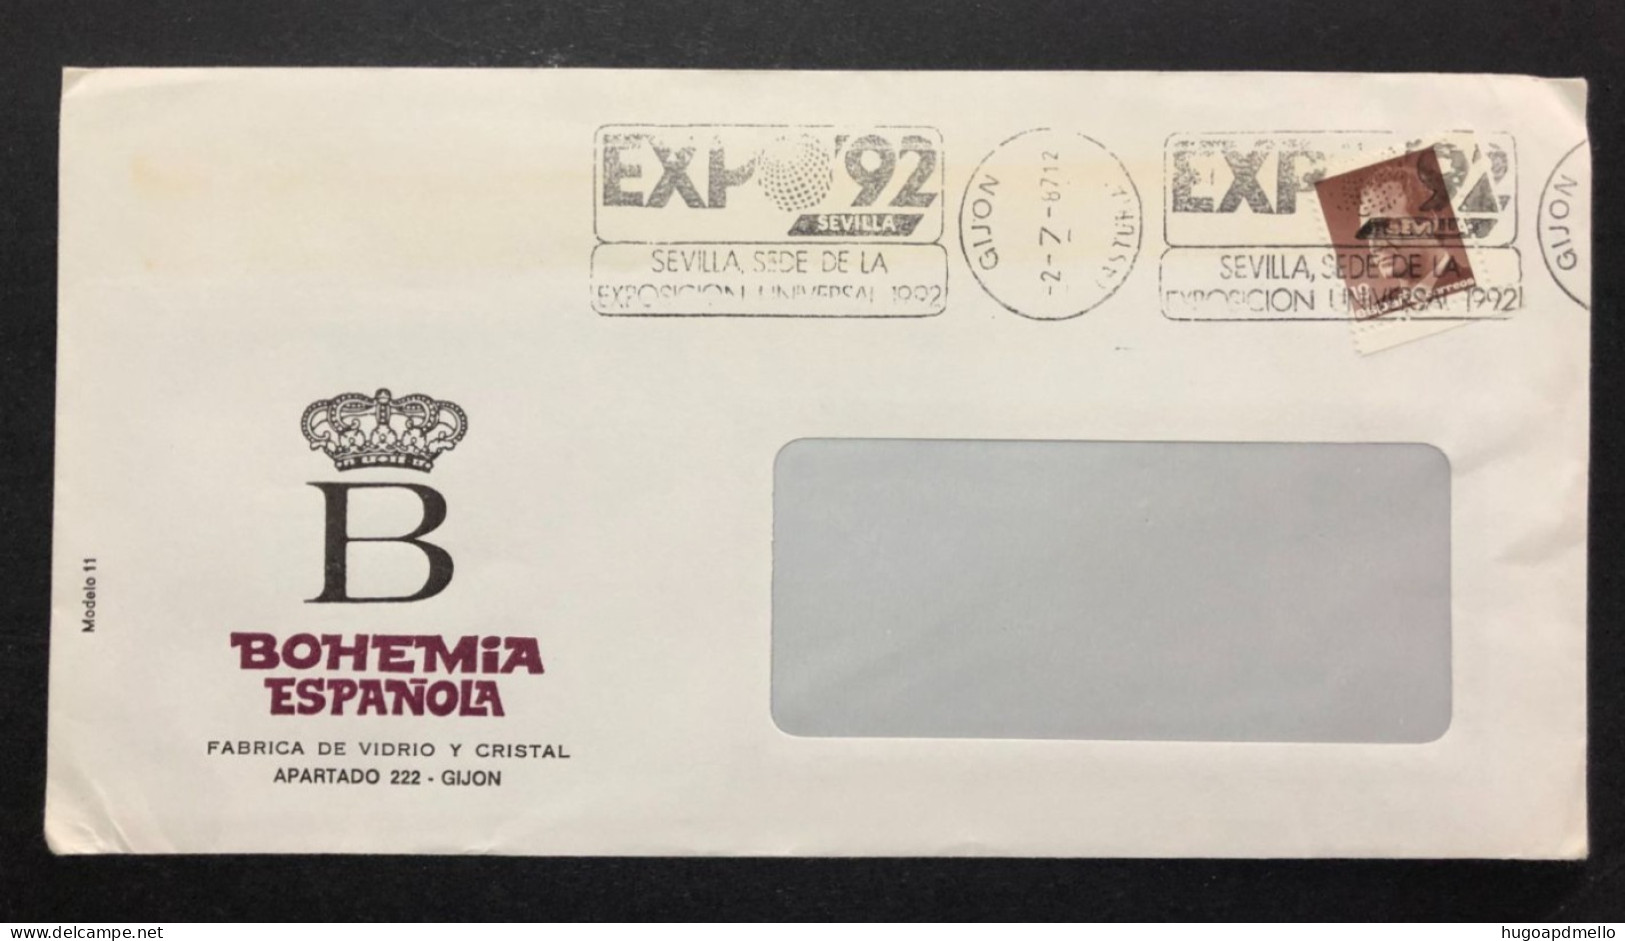 SPAIN, Cover With Special Cancellation « EXPO '92 », « GIJON Postmark », 1987 - 1992 – Sevilla (Spanien)